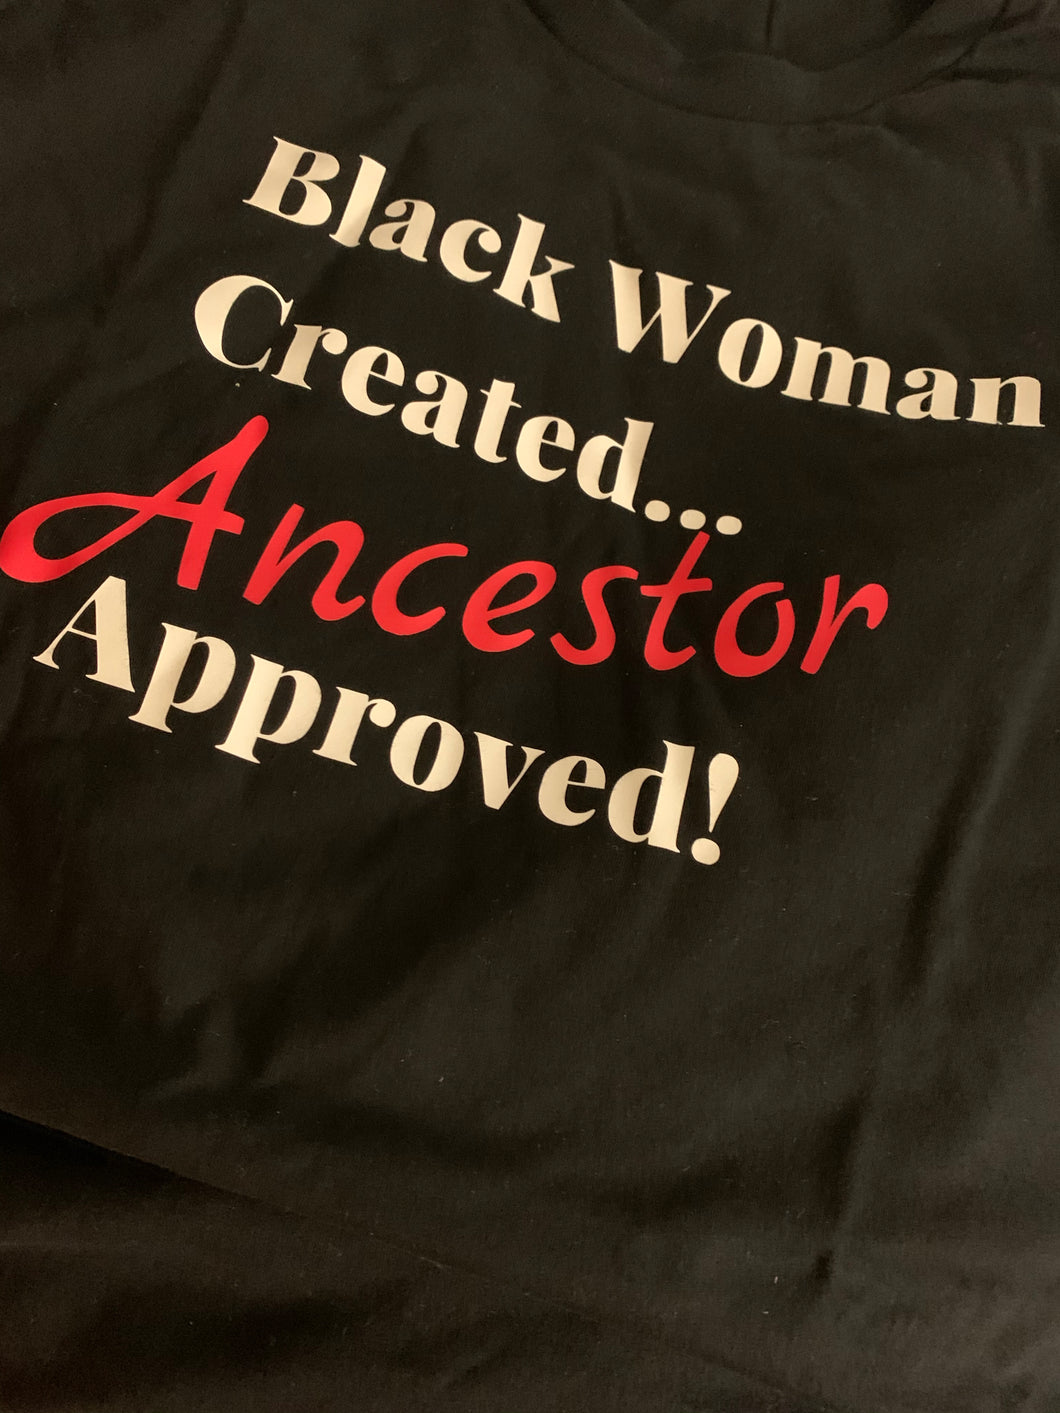 Black Woman Created Ancestor Approved (Hoodie)